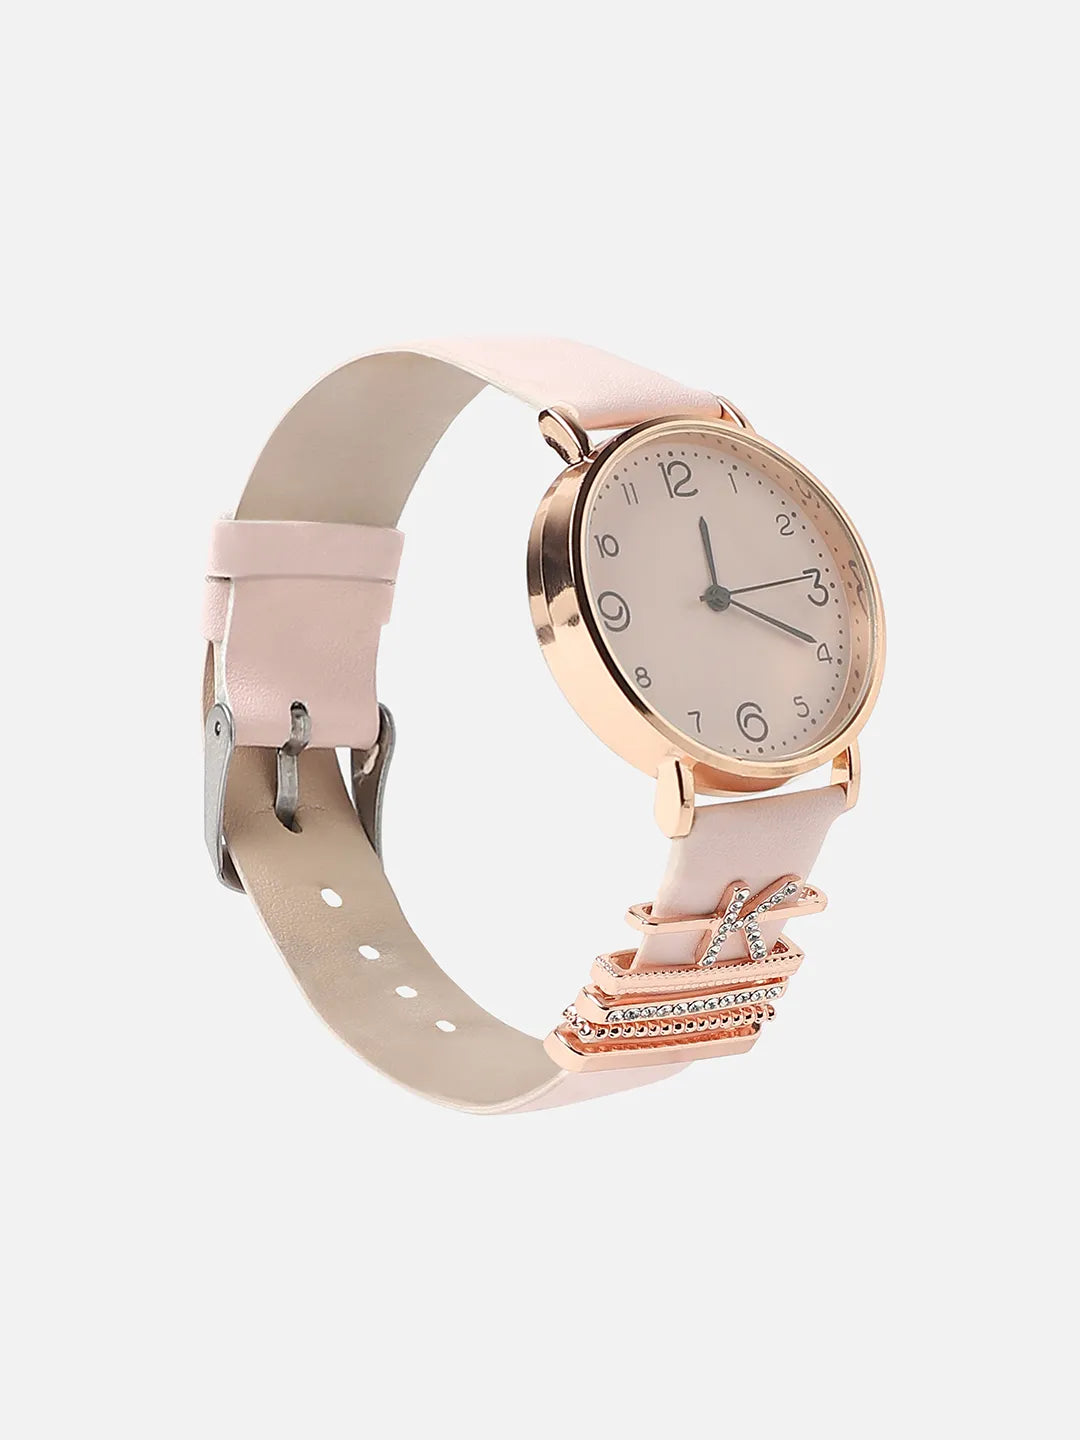 Round Analog Watch With K Initial Watch Charm - Dusty Pink